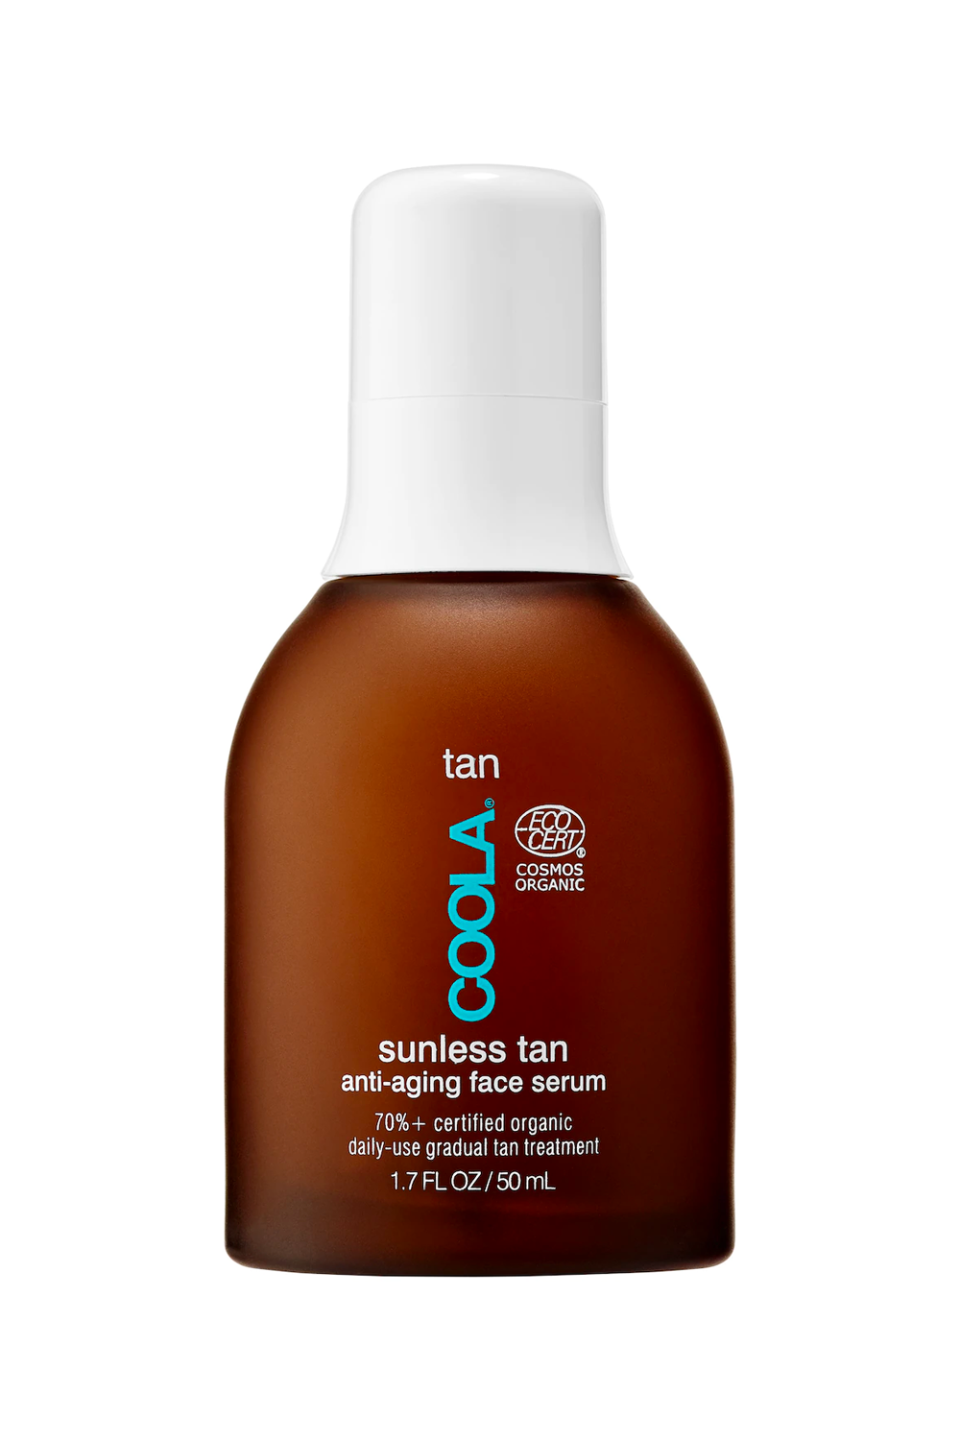 2) Coola Organic Sunless Tan Anti-Aging Face Serum